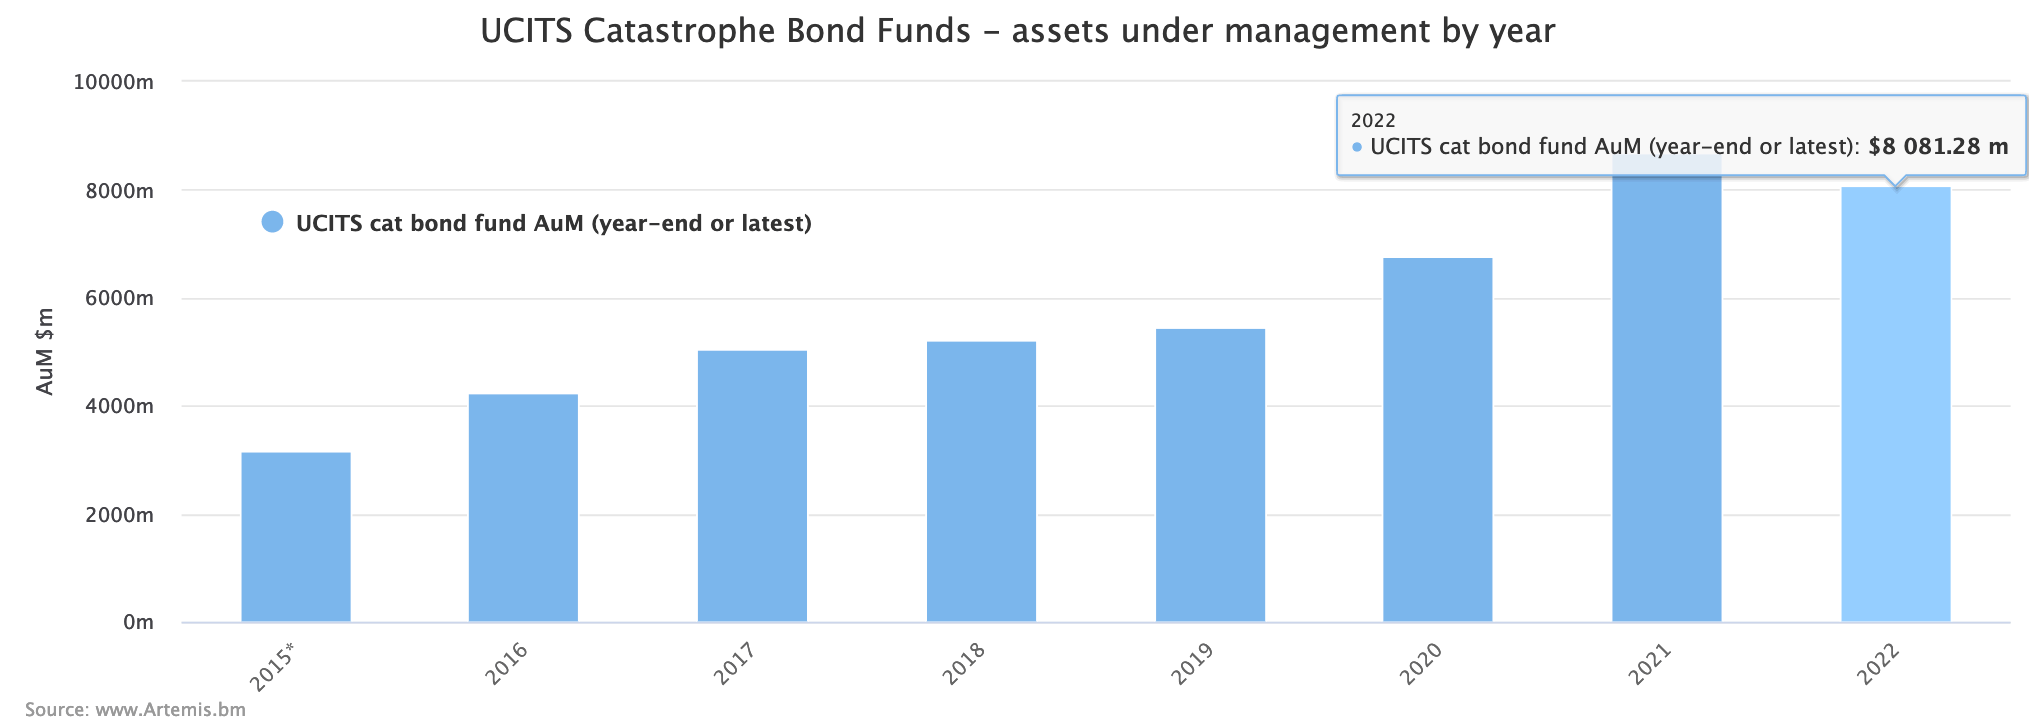 cat-bond-fund-assets-2022-ucits